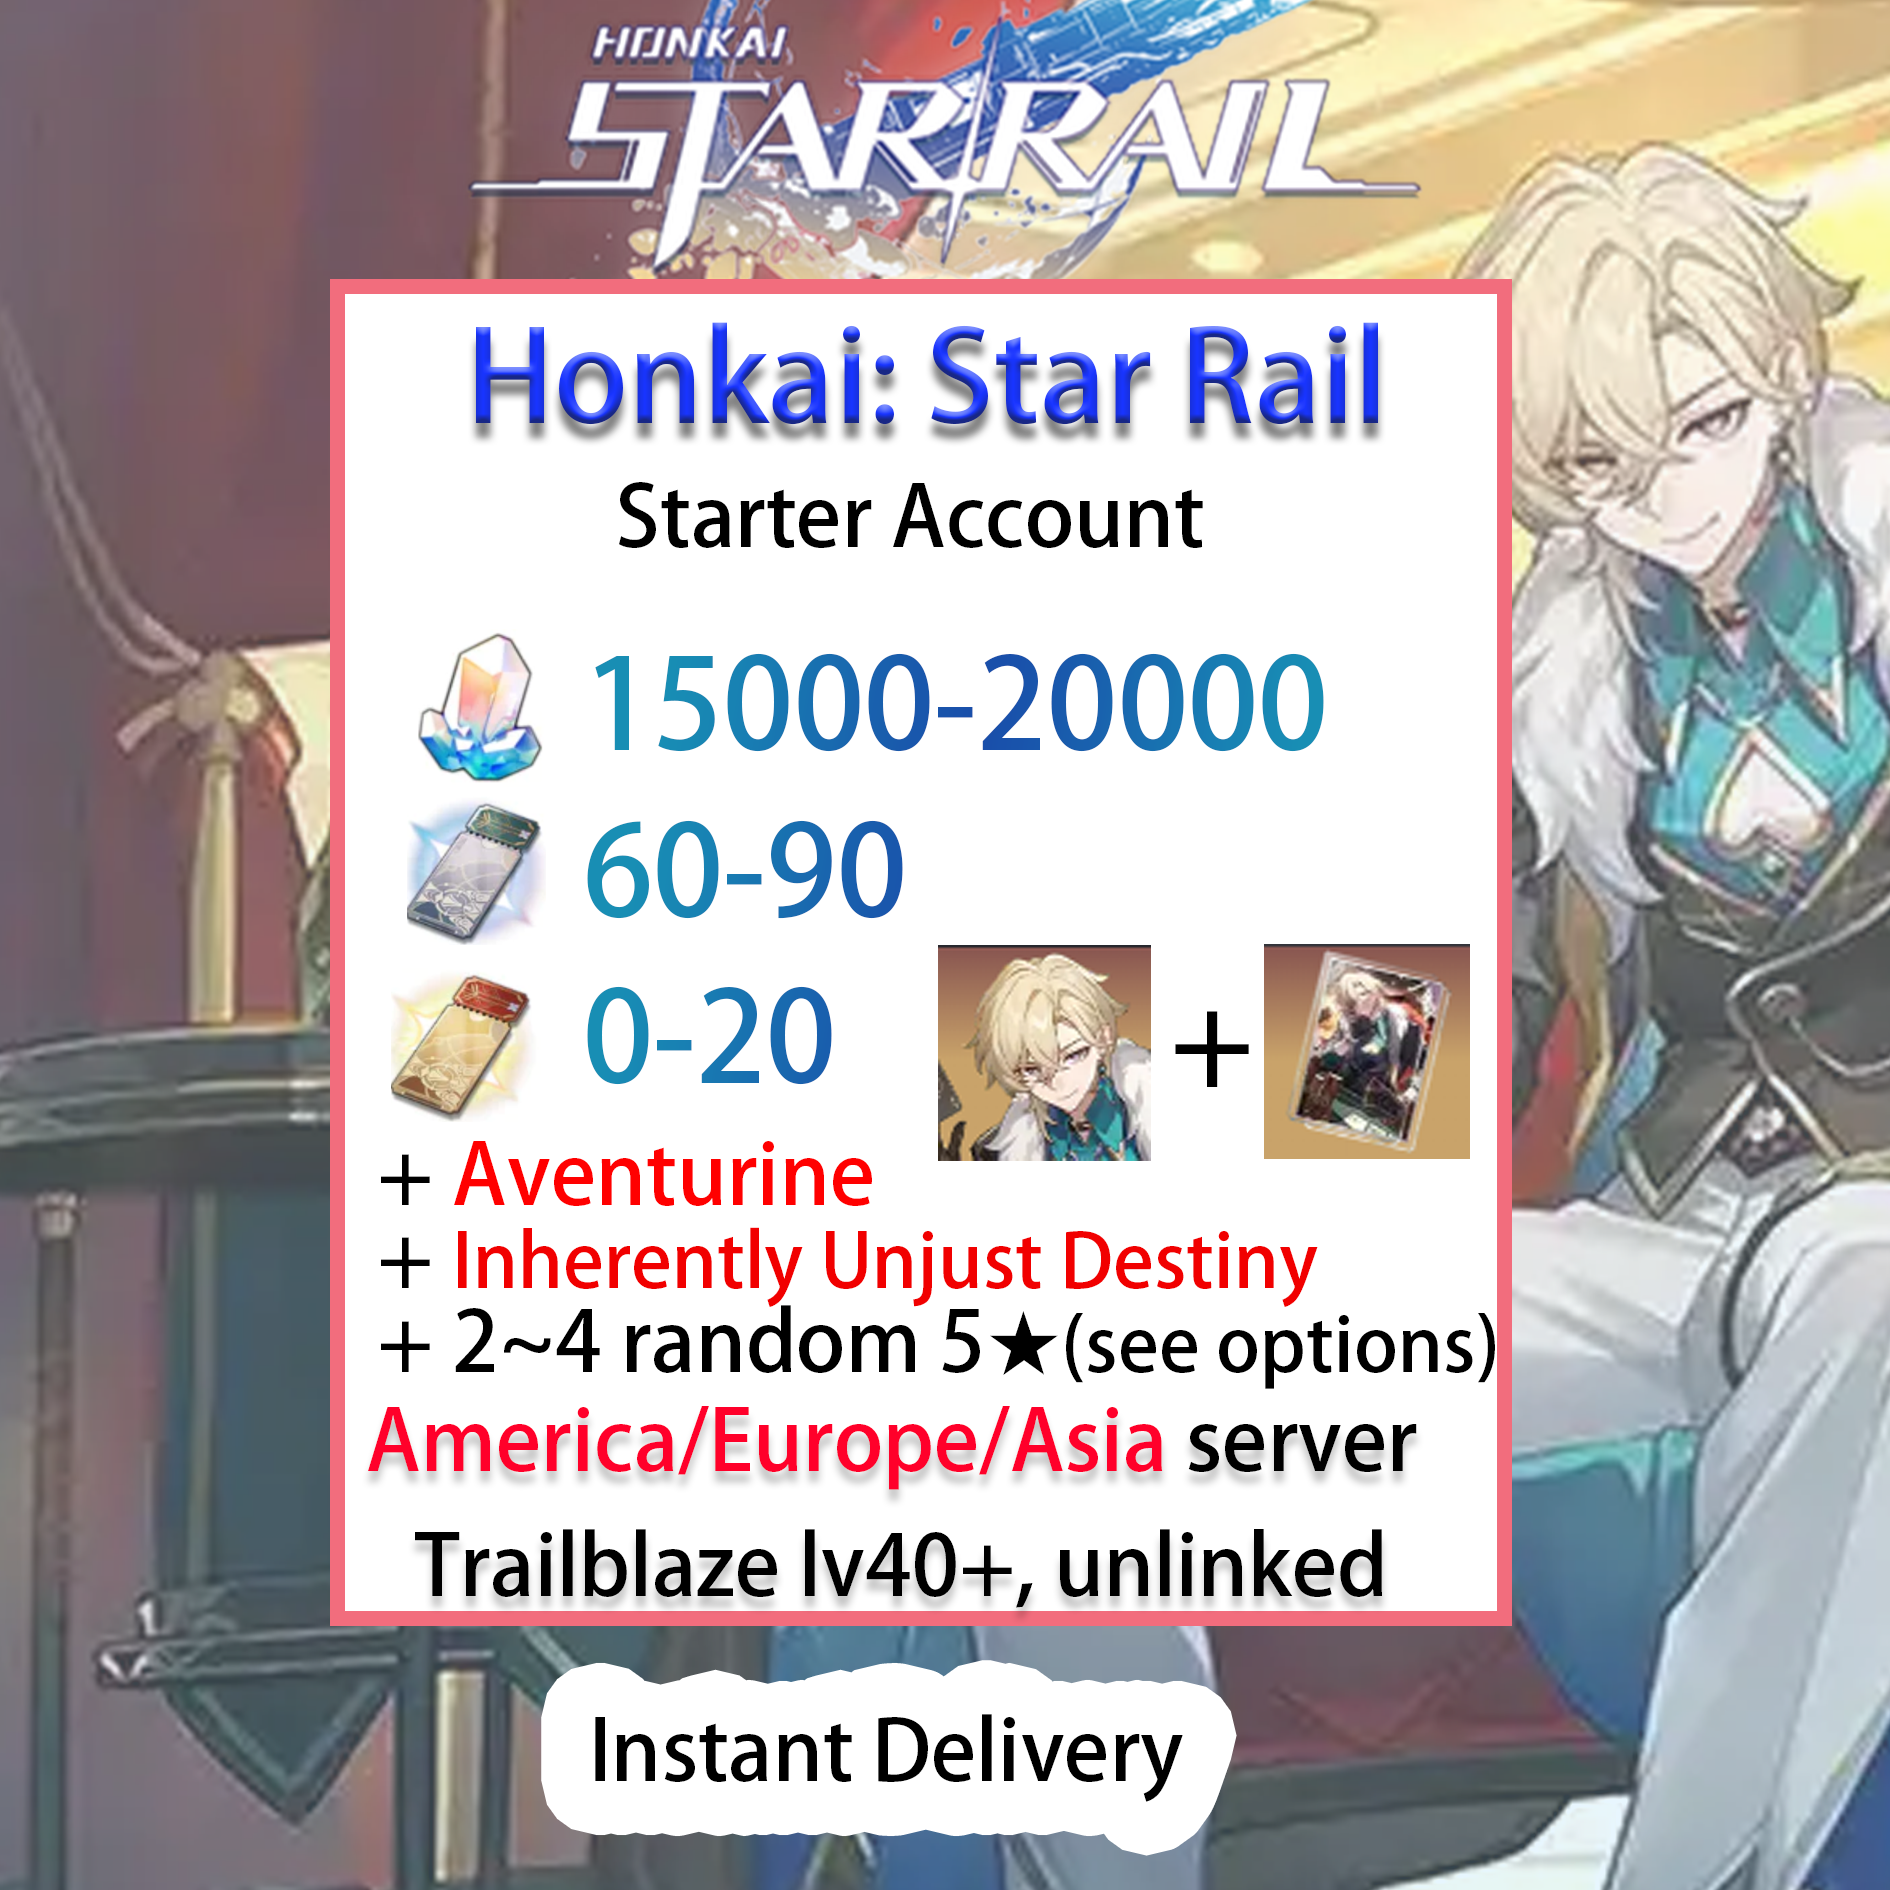 [NA/EU/ASIA][INSTANT] Aventurine + Inherently Unjust Destiny Honkai: Star Rail Farmed Starter Account America/Europe/Asia (see options)-Mobile Games Starter